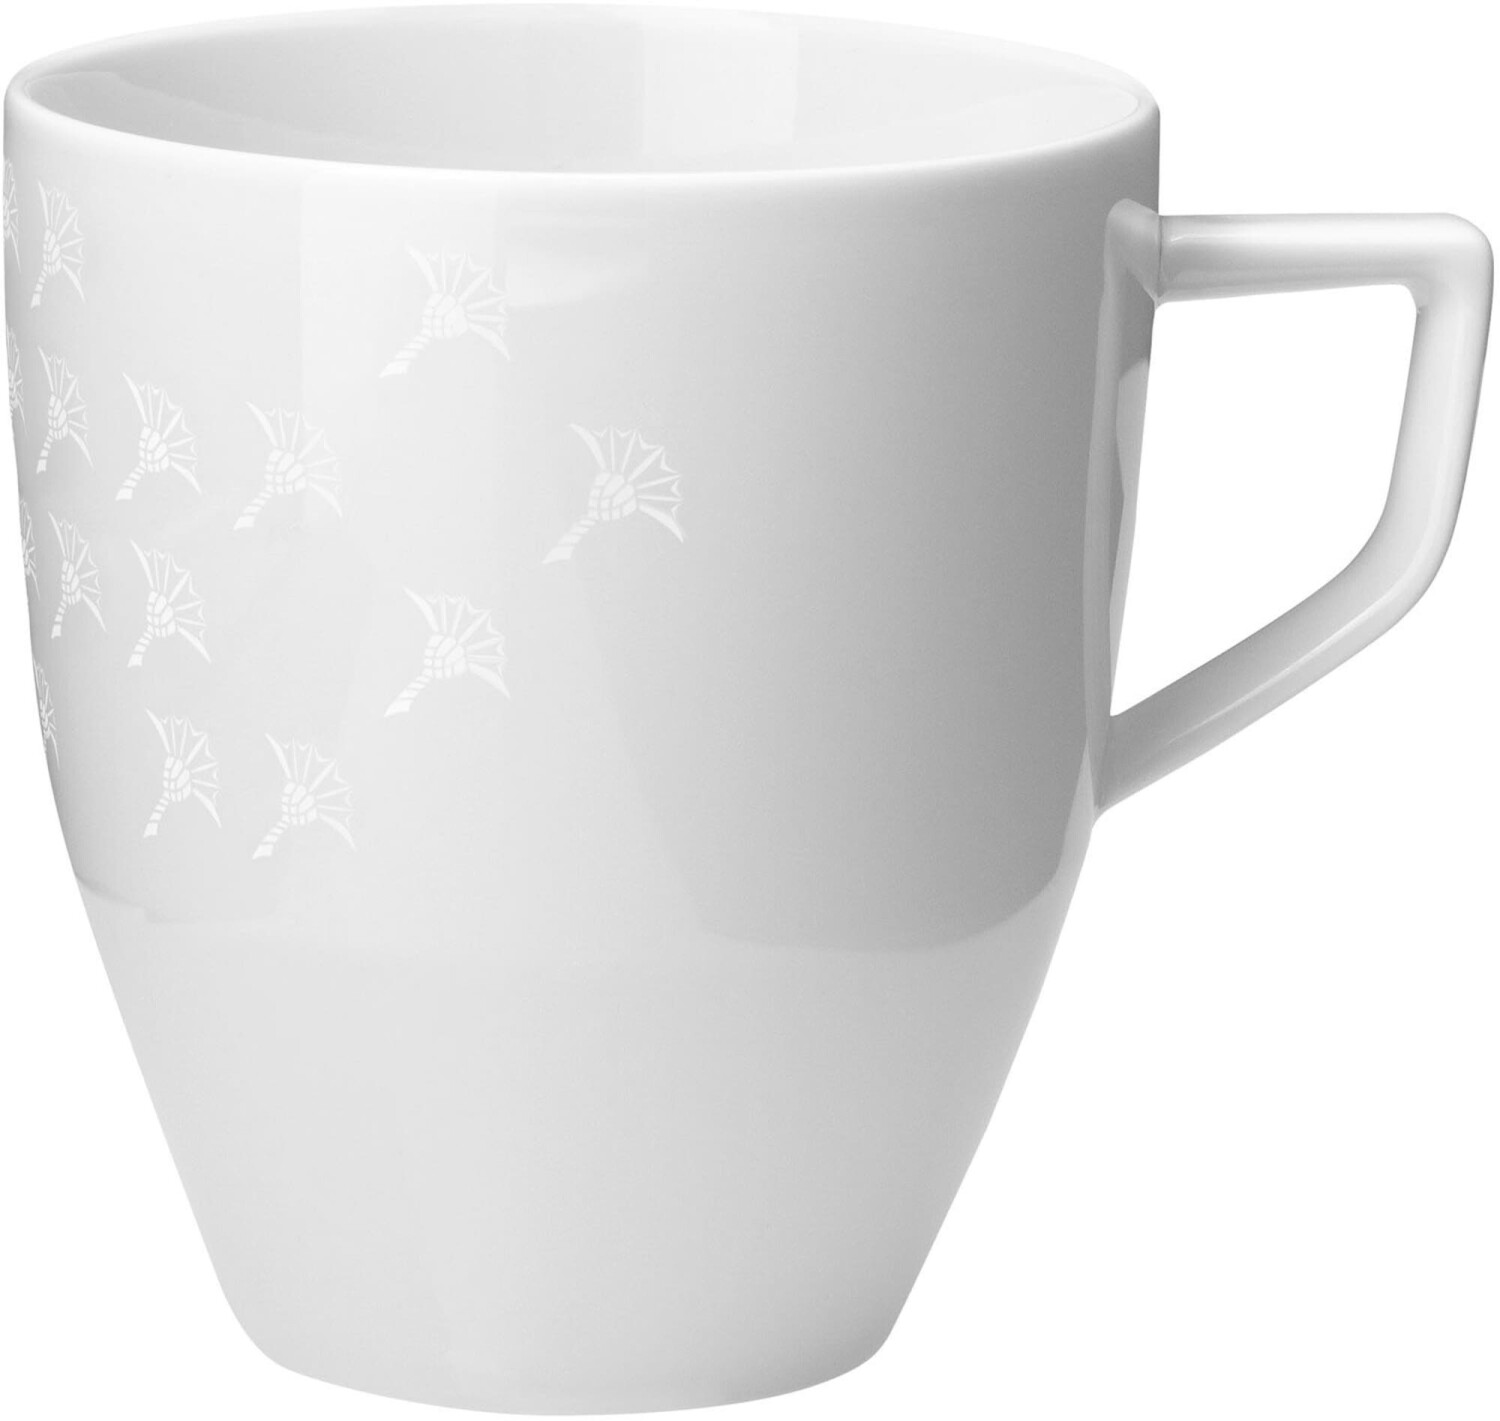 Joop! Kaffeebecher Faded Cornflower weiß (2er Set) ab 42,99 € |  Preisvergleich bei